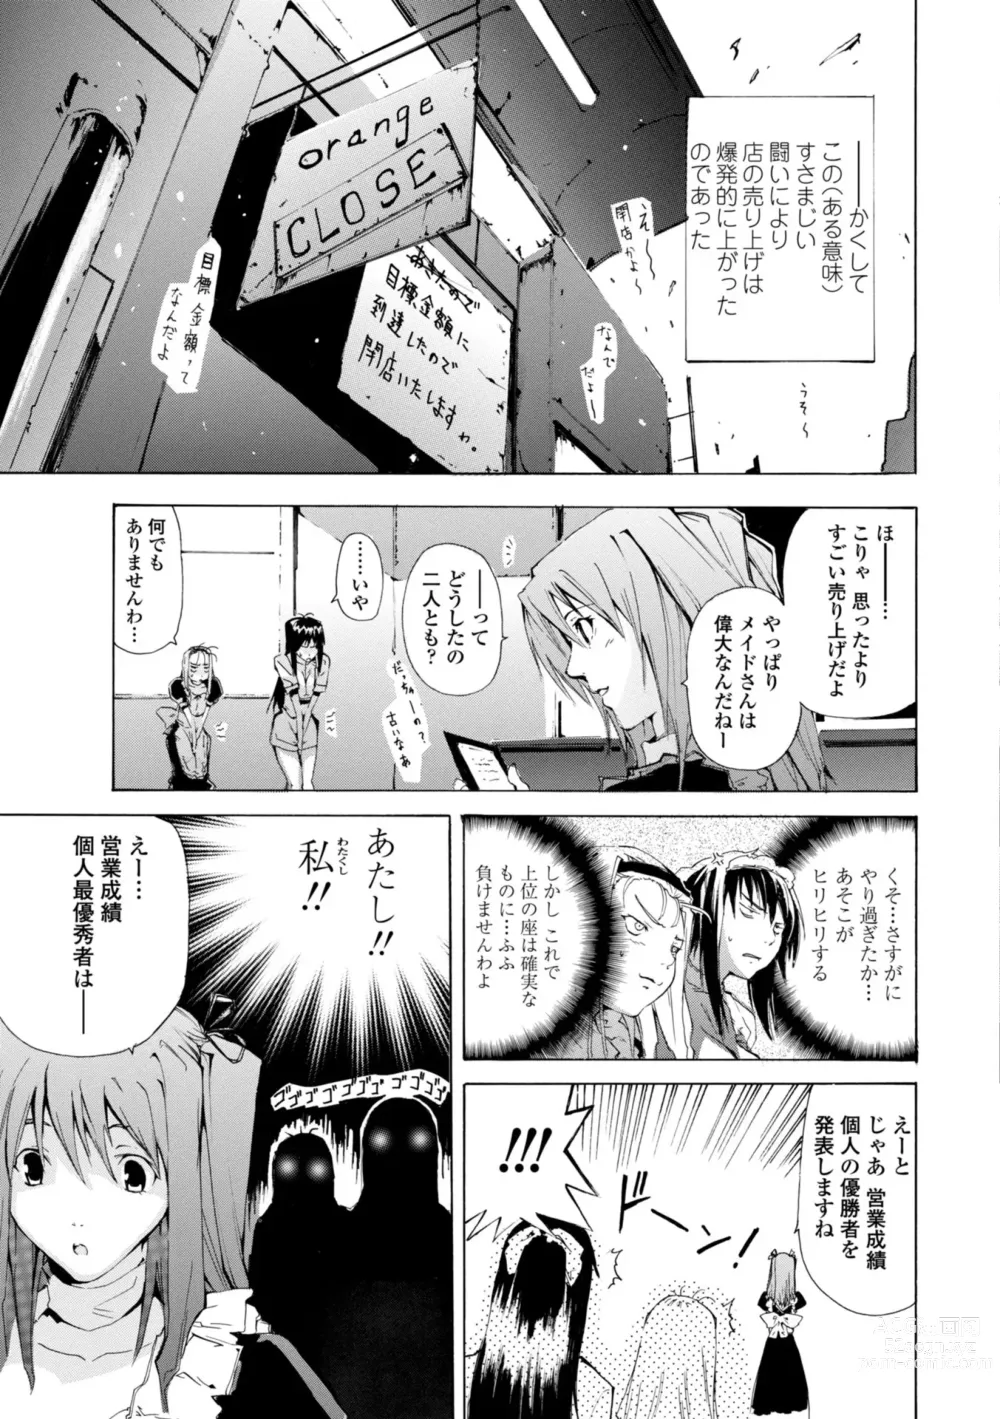 Page 21 of manga Houga Ge